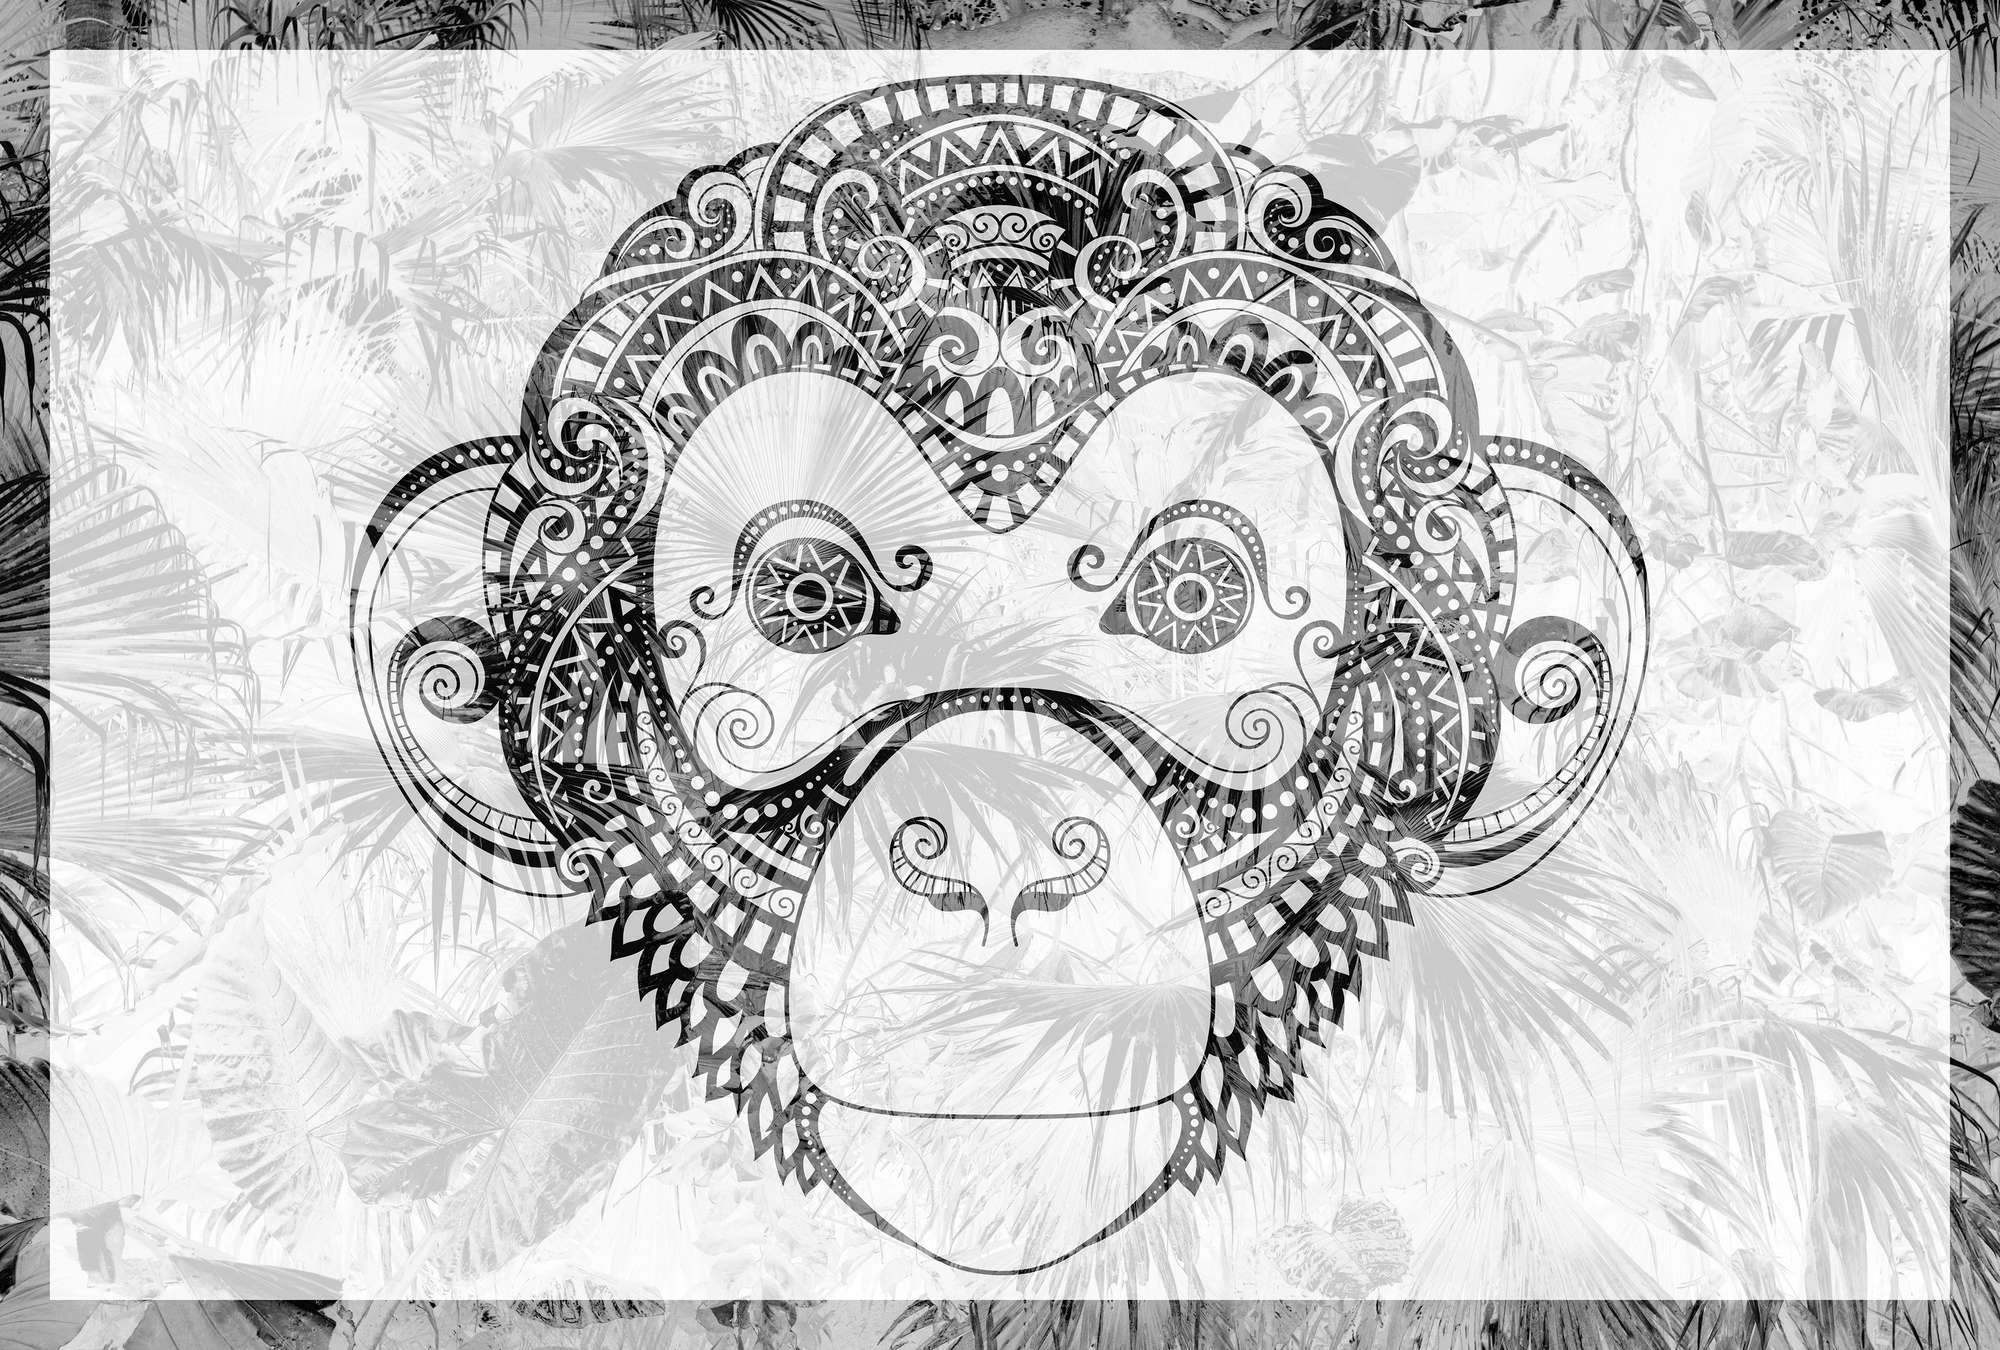             Photo wallpaper monkey comic style, jungle motif black and white - black, white, grey
        